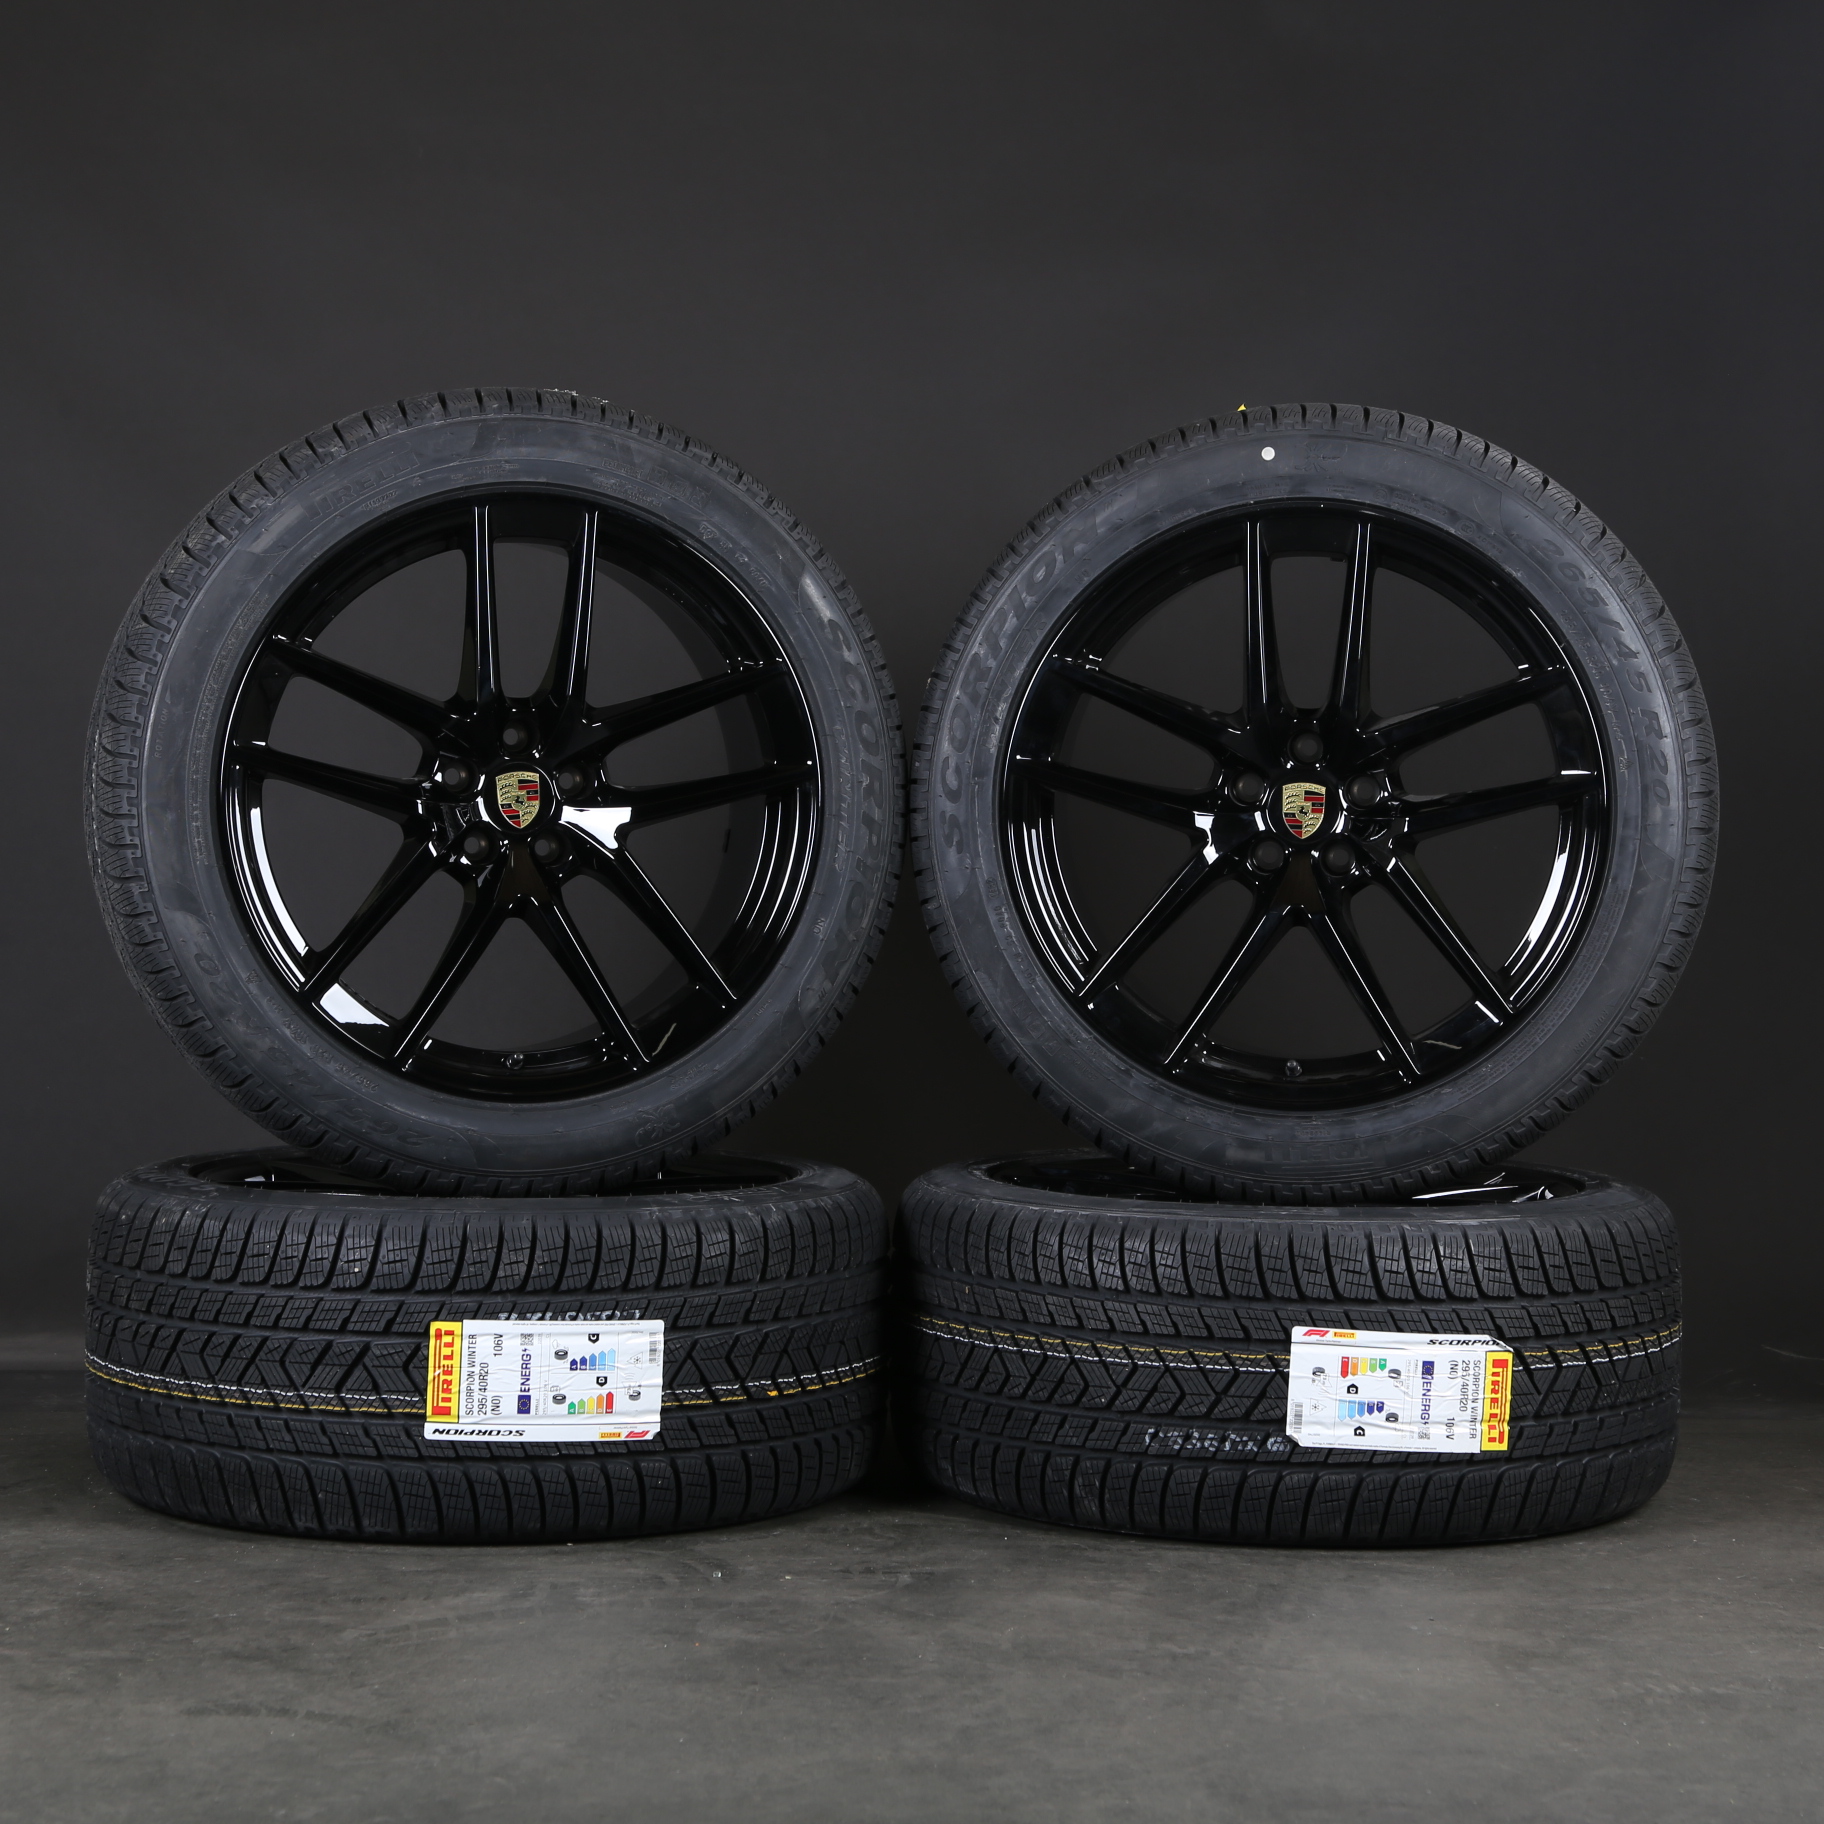 ▷ Original rims and complete wheels for Porsche Macan